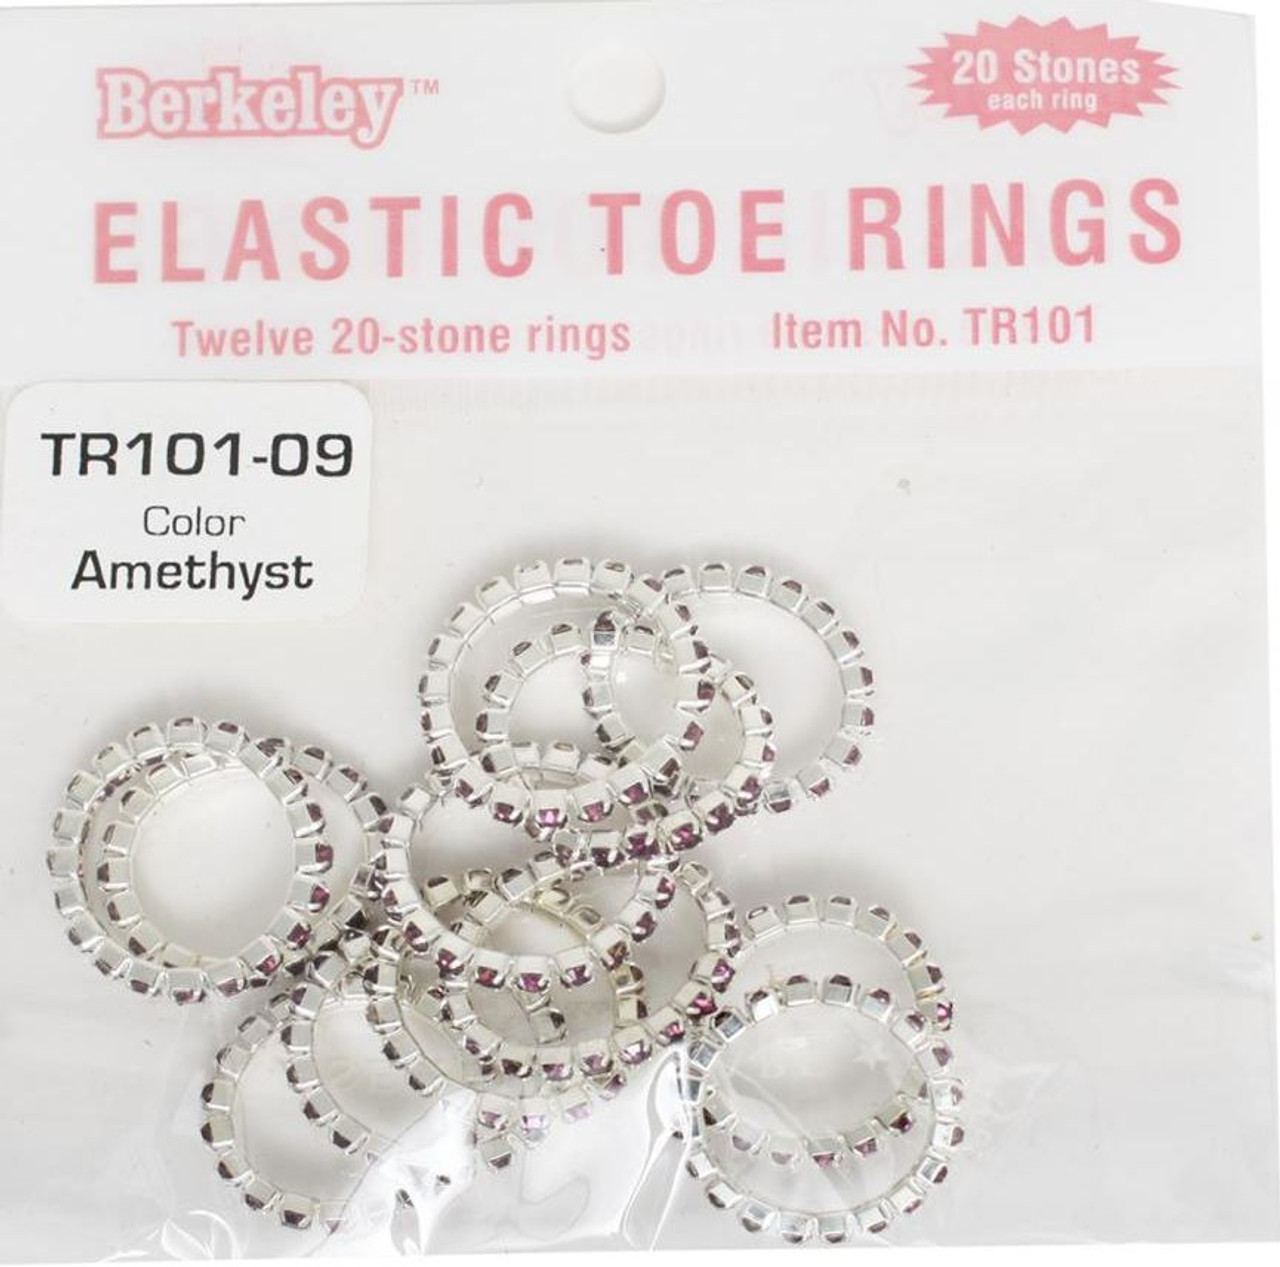 Berkeley Elastic Toe Ring Amethyst {bag of 12 rings}